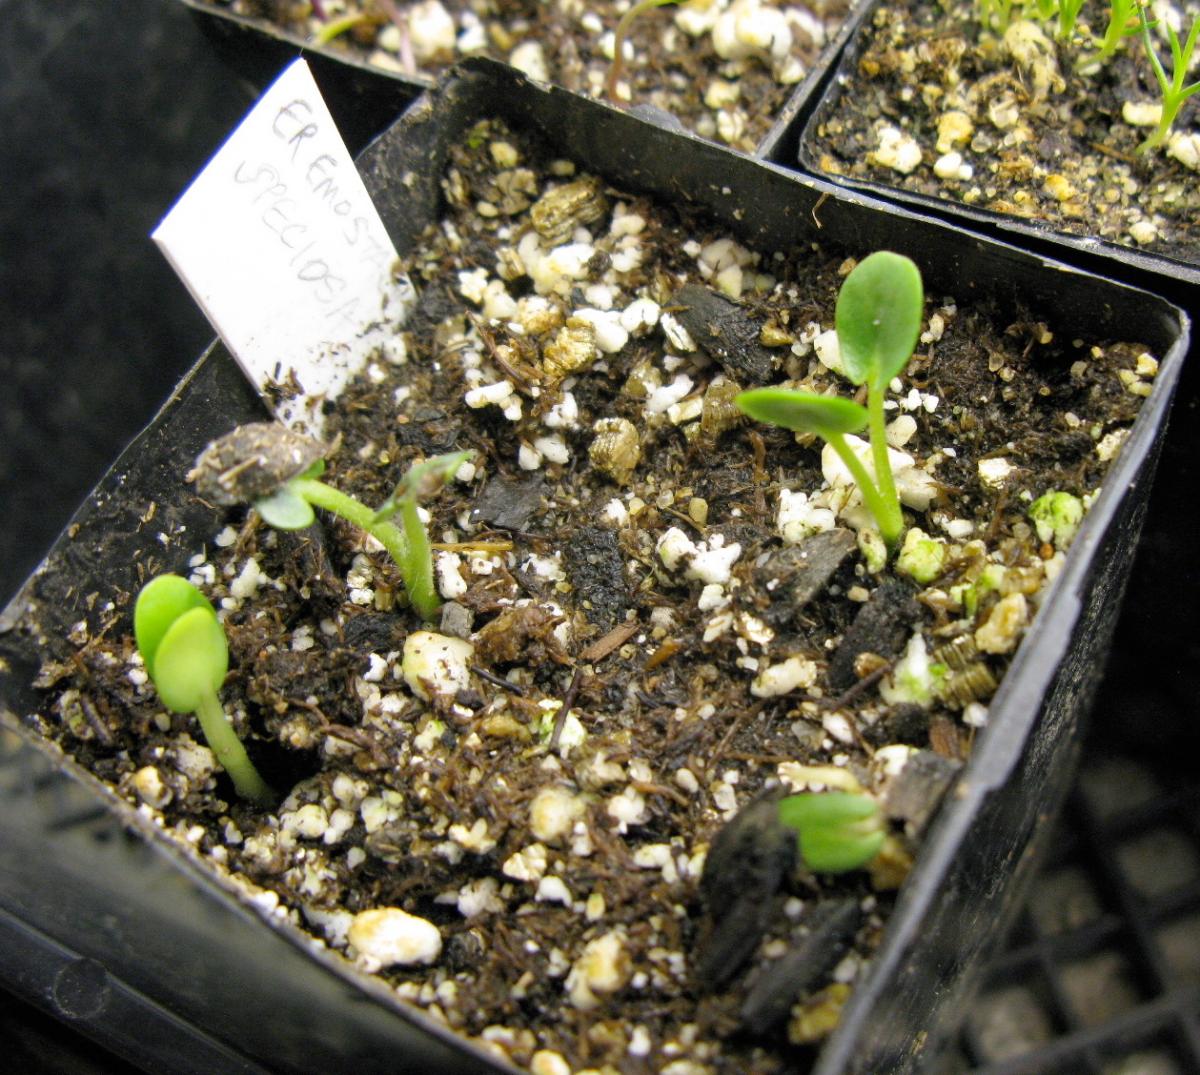 Seeds germinated in 8 days at room temperature; no pre-treatment; Phlomoides speciosa; Calgary, AB.